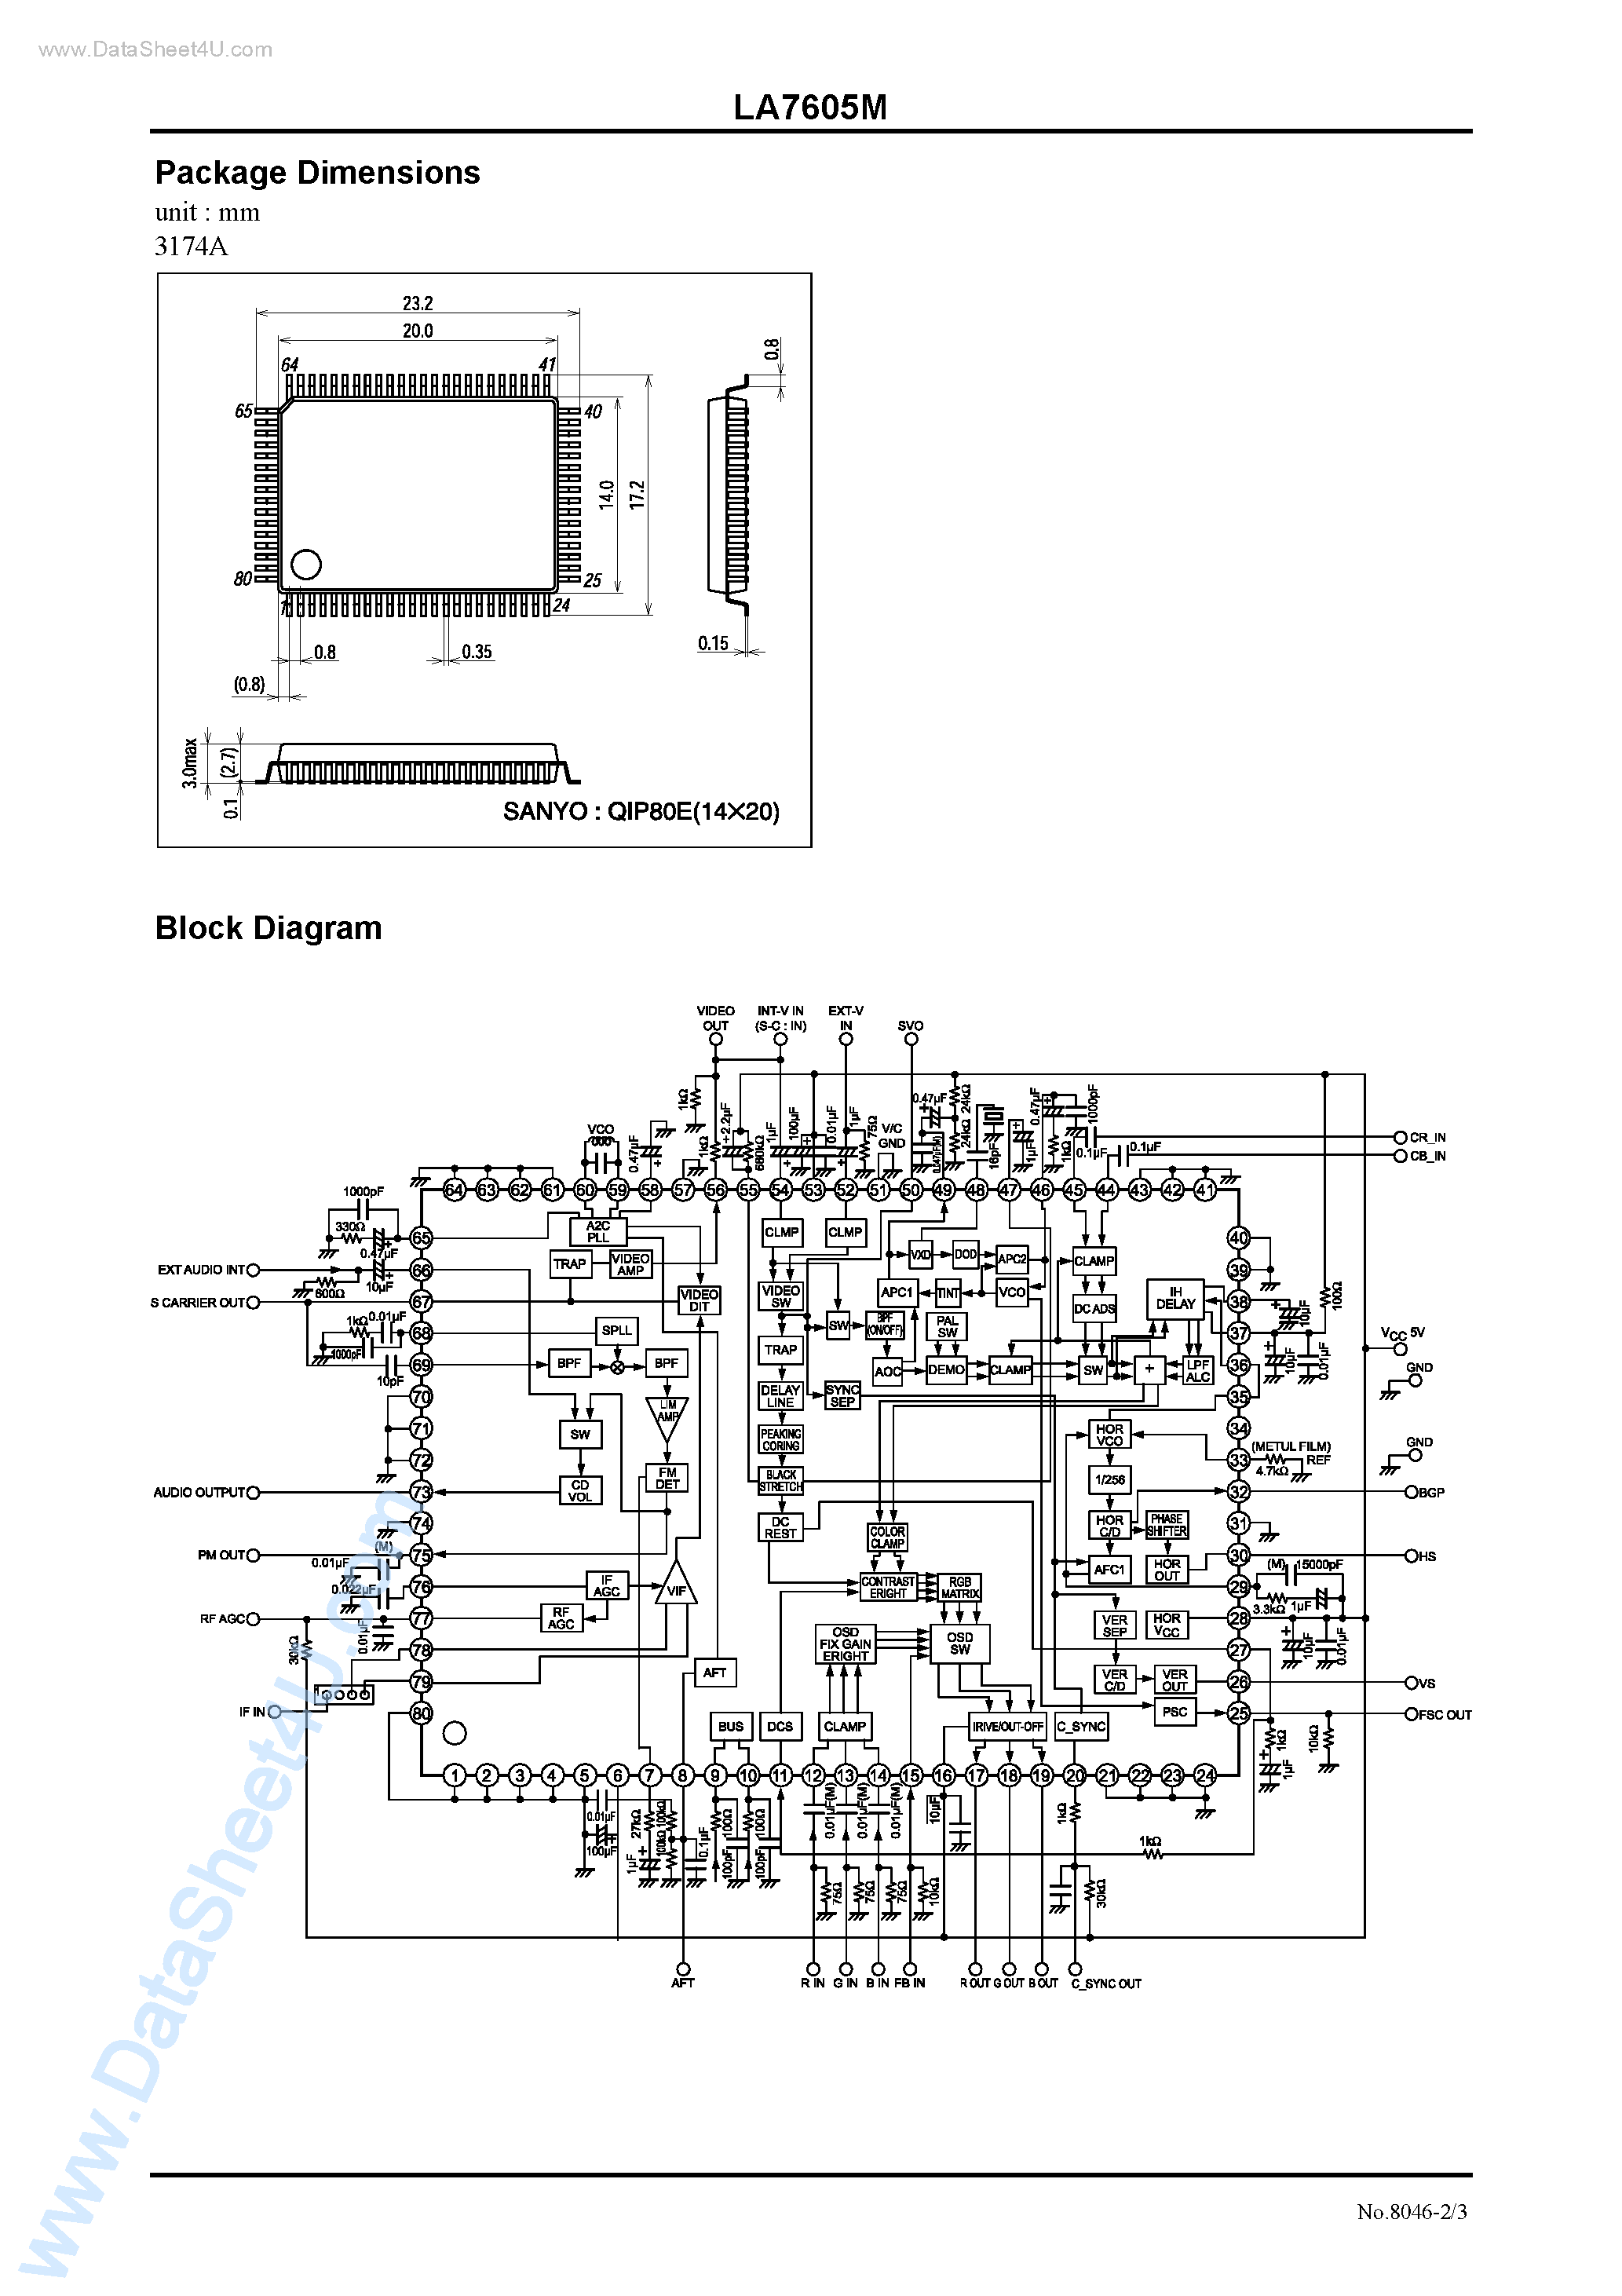 Datasheet LA7605M - Video Signal Processor page 2